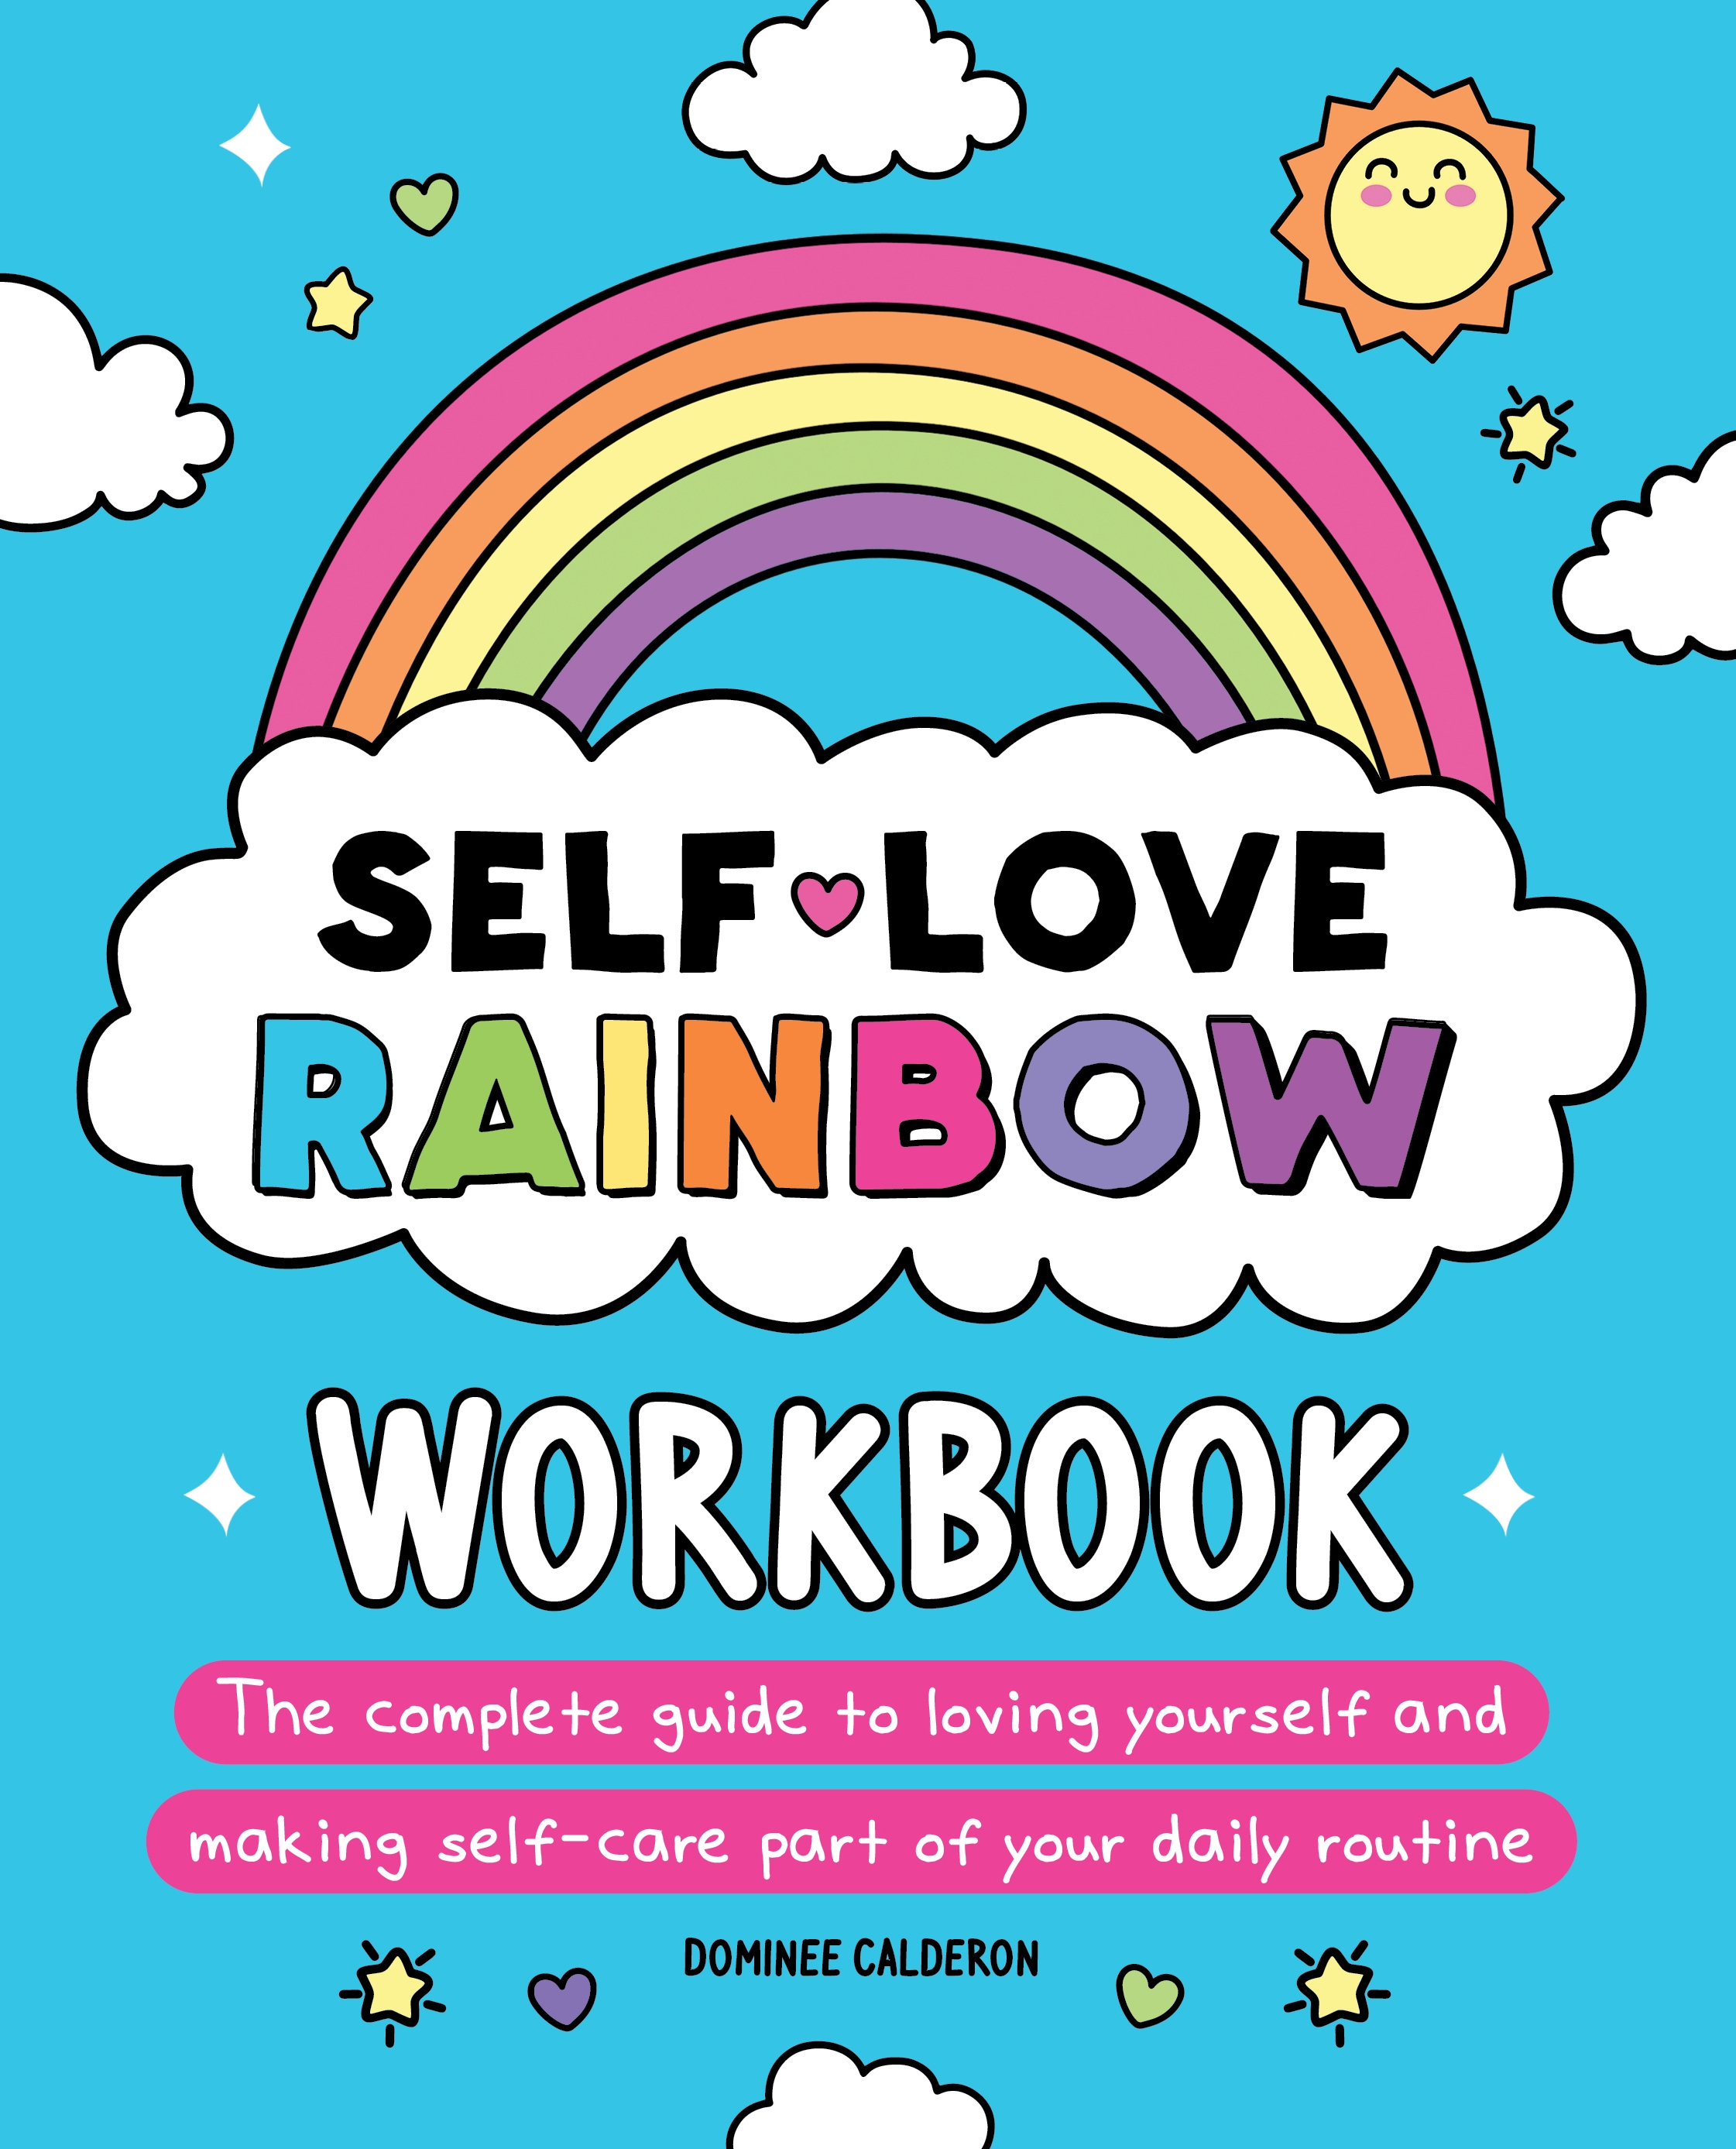 BOOK REVIEW OF “Self-Love Rainbow Workbook” by Dominee Calderon